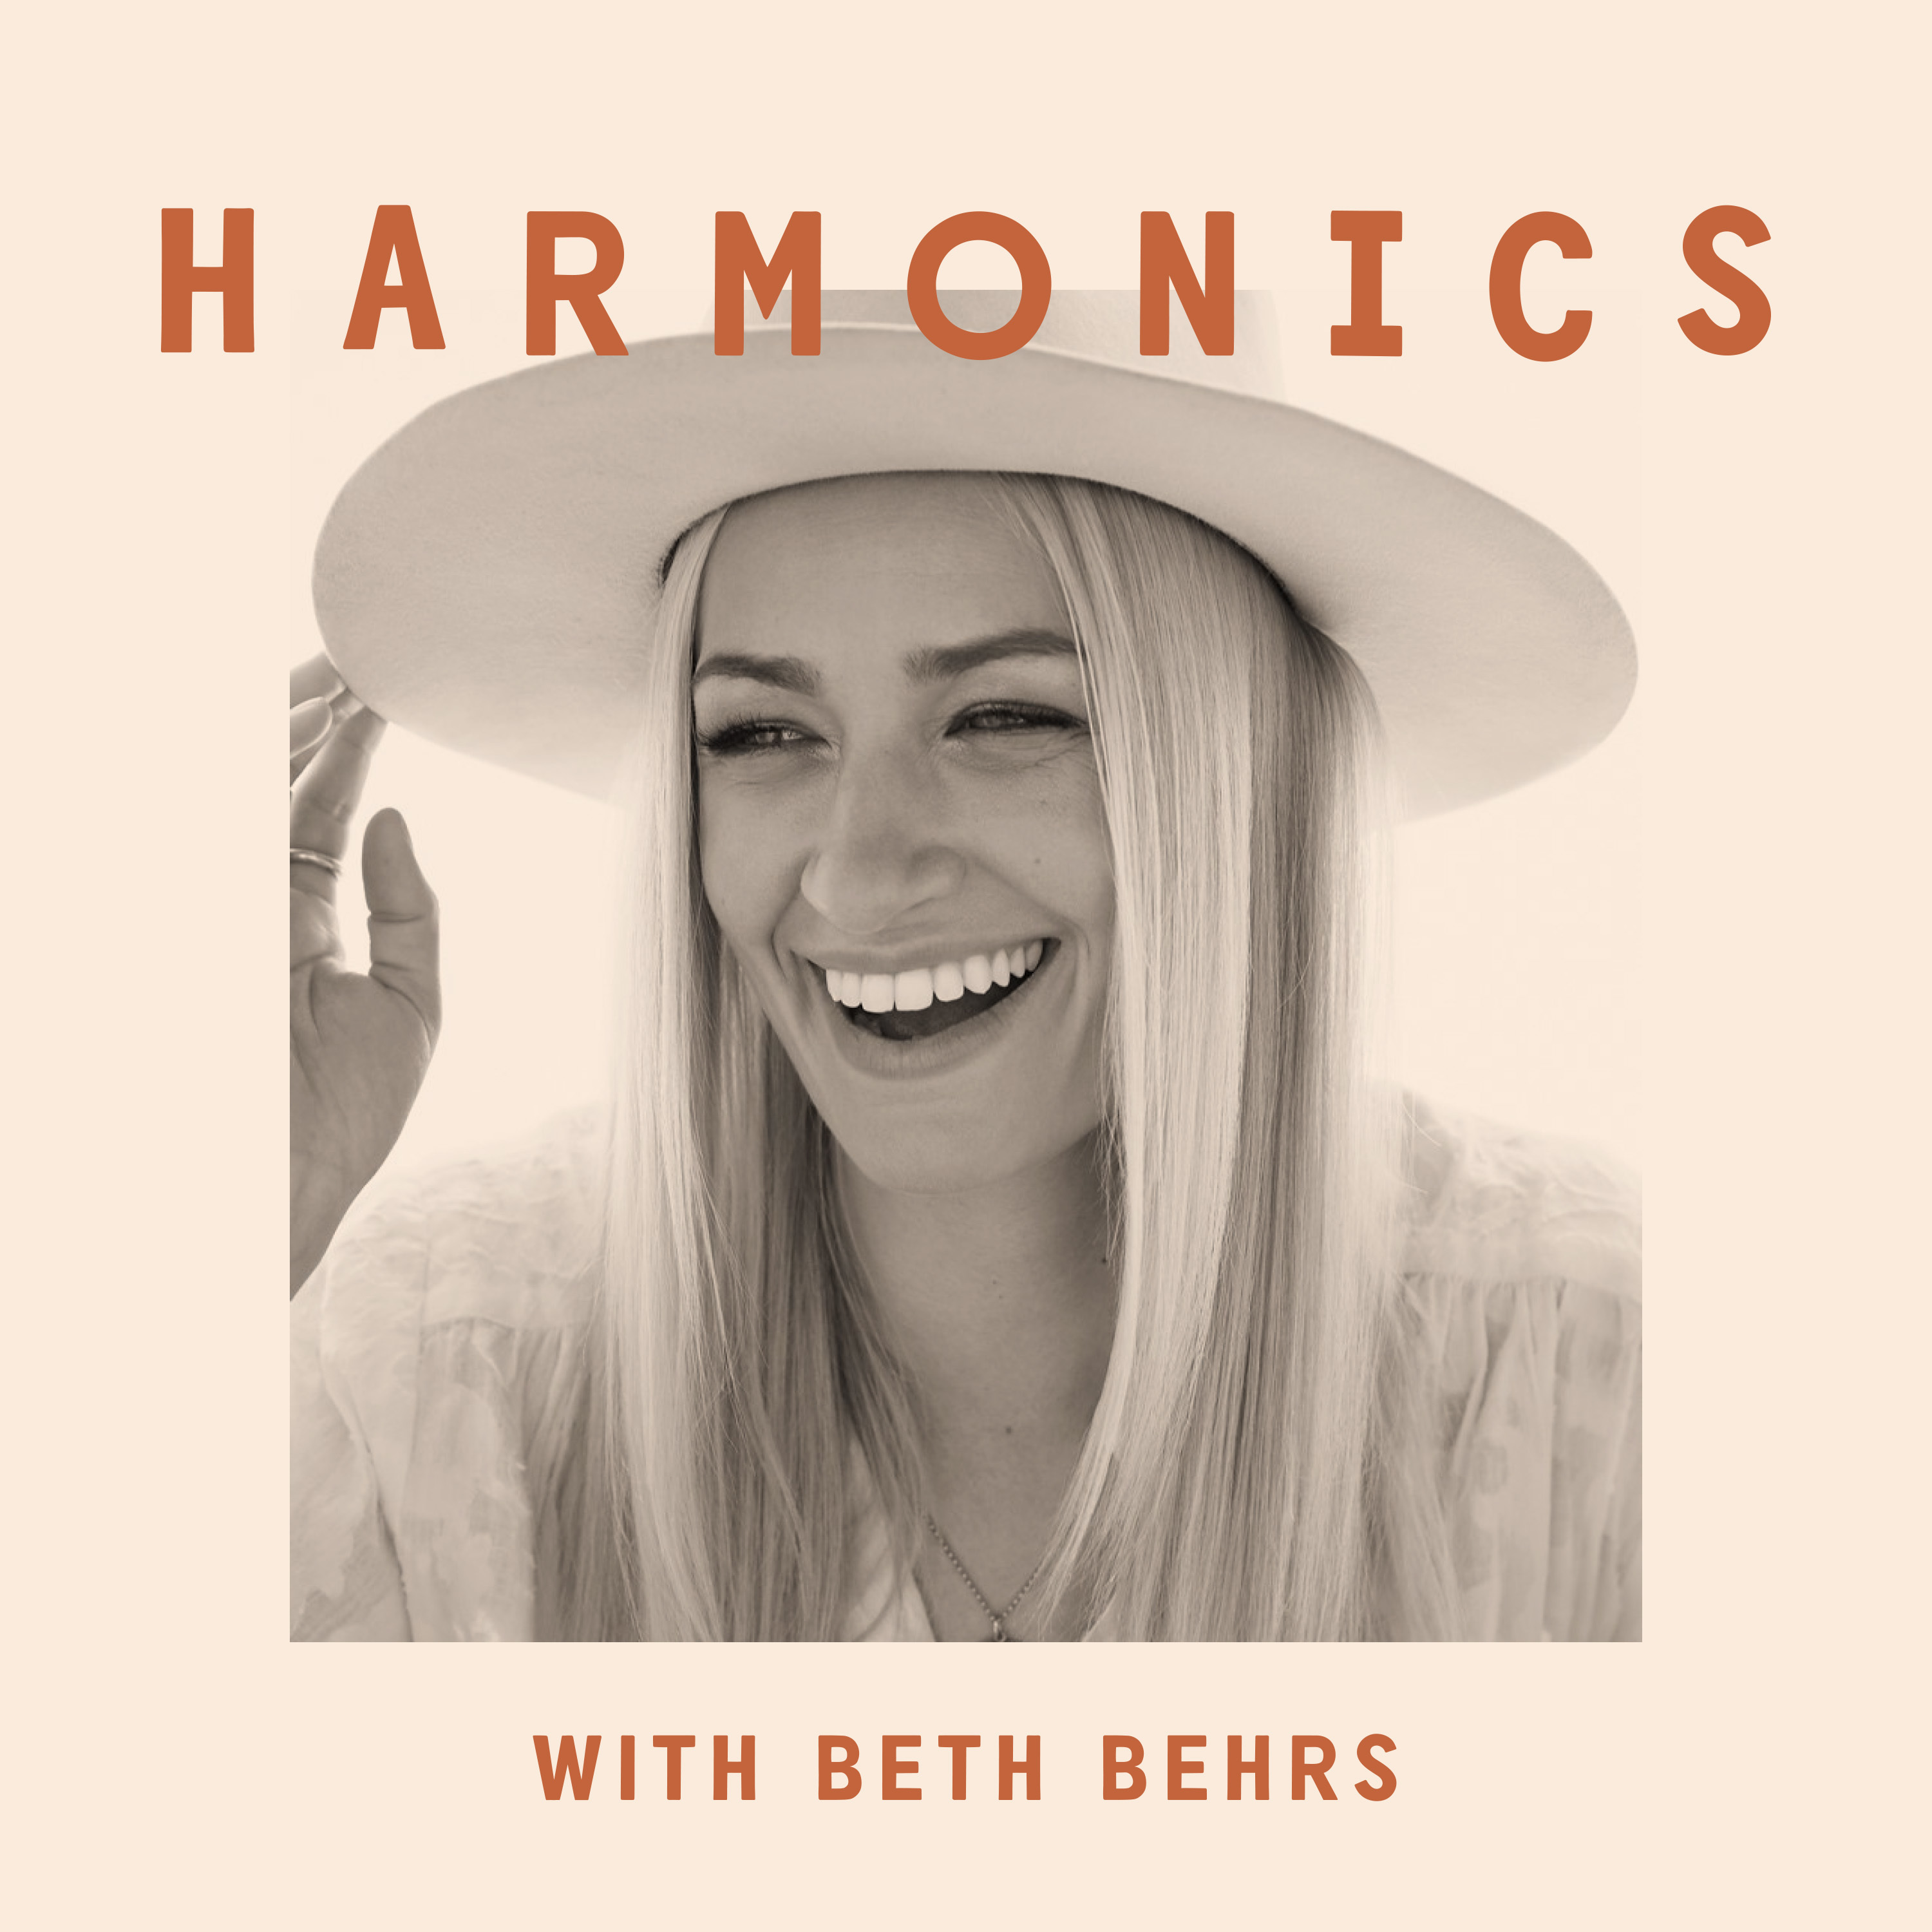 Coming Soon: Harmonics with Beth Behrs